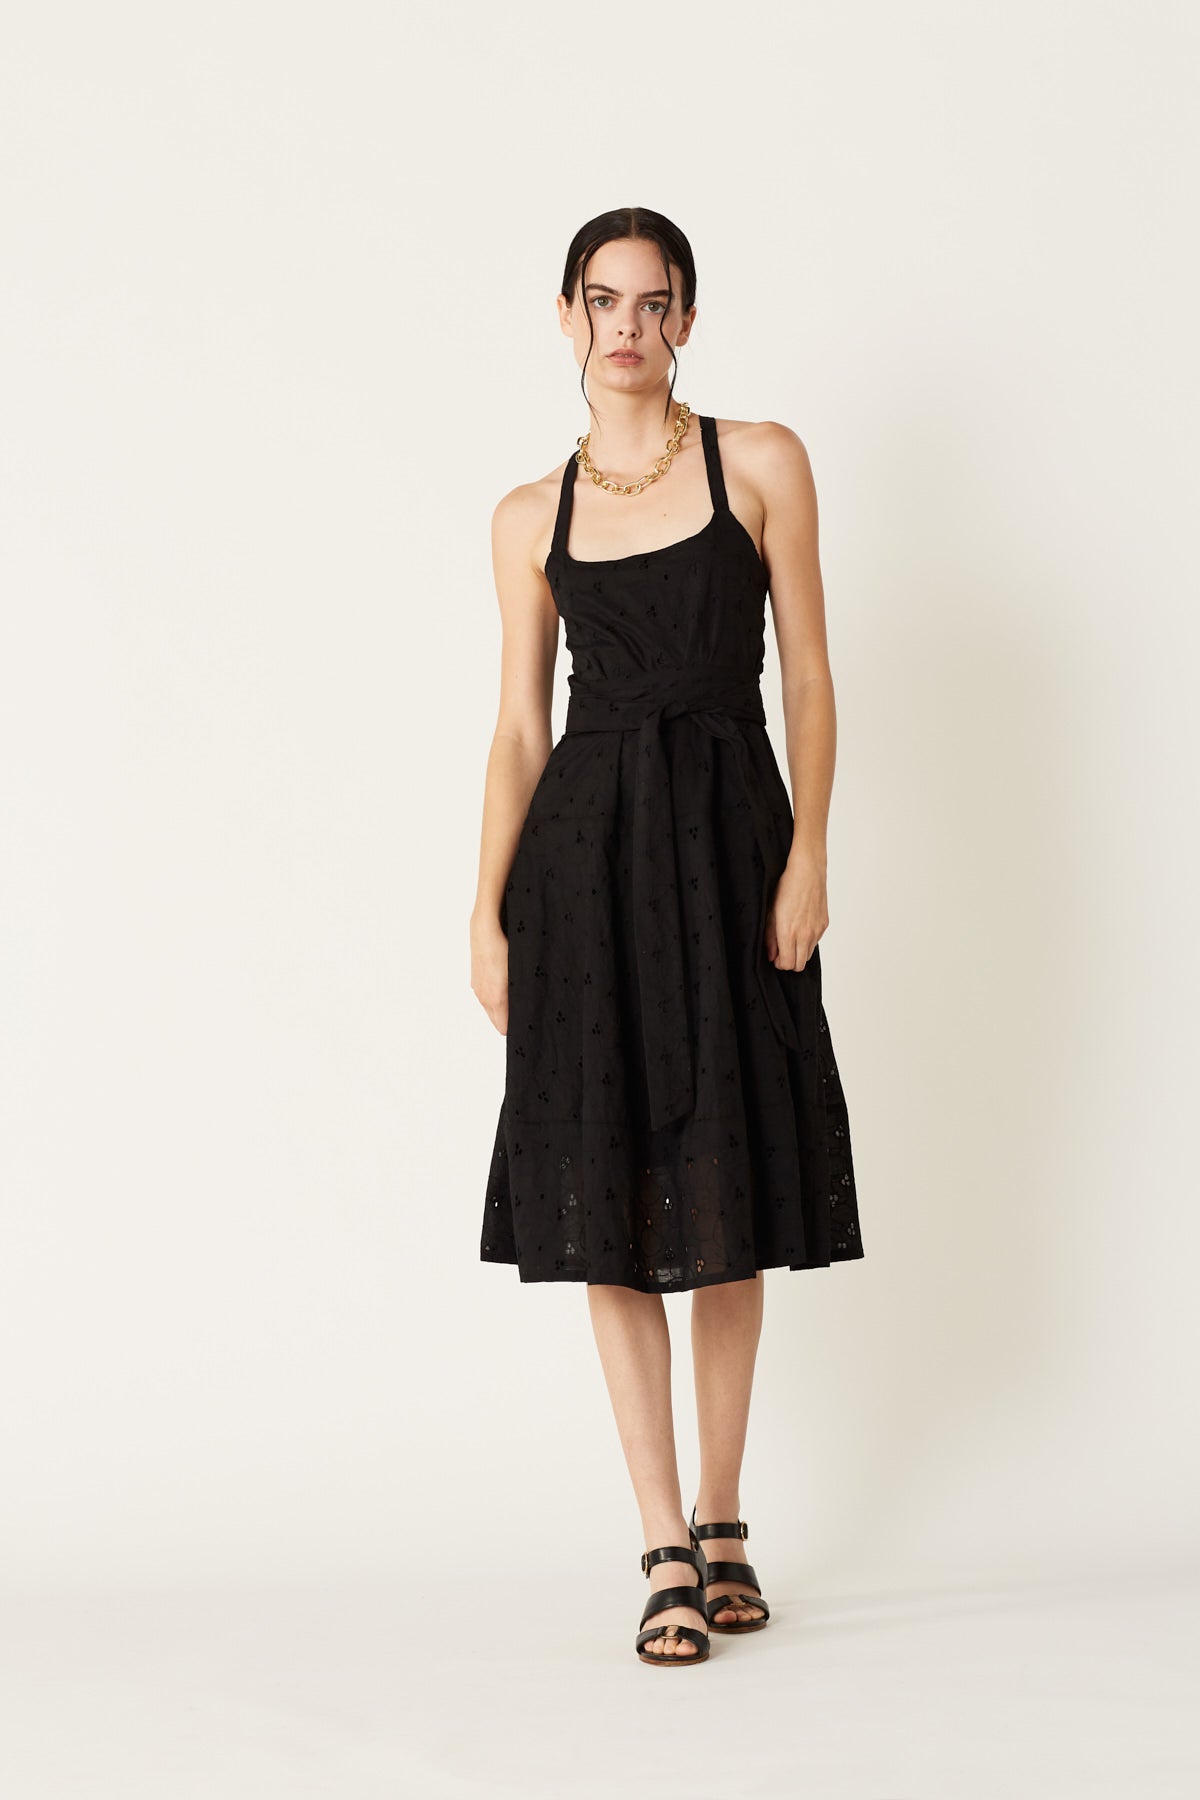 Martha Dress in Black Eyelet Cotton. Shop Megan Huntz is made in Atlanta, ethically and sustainably, by slow fashion designer Megan Huntz. 